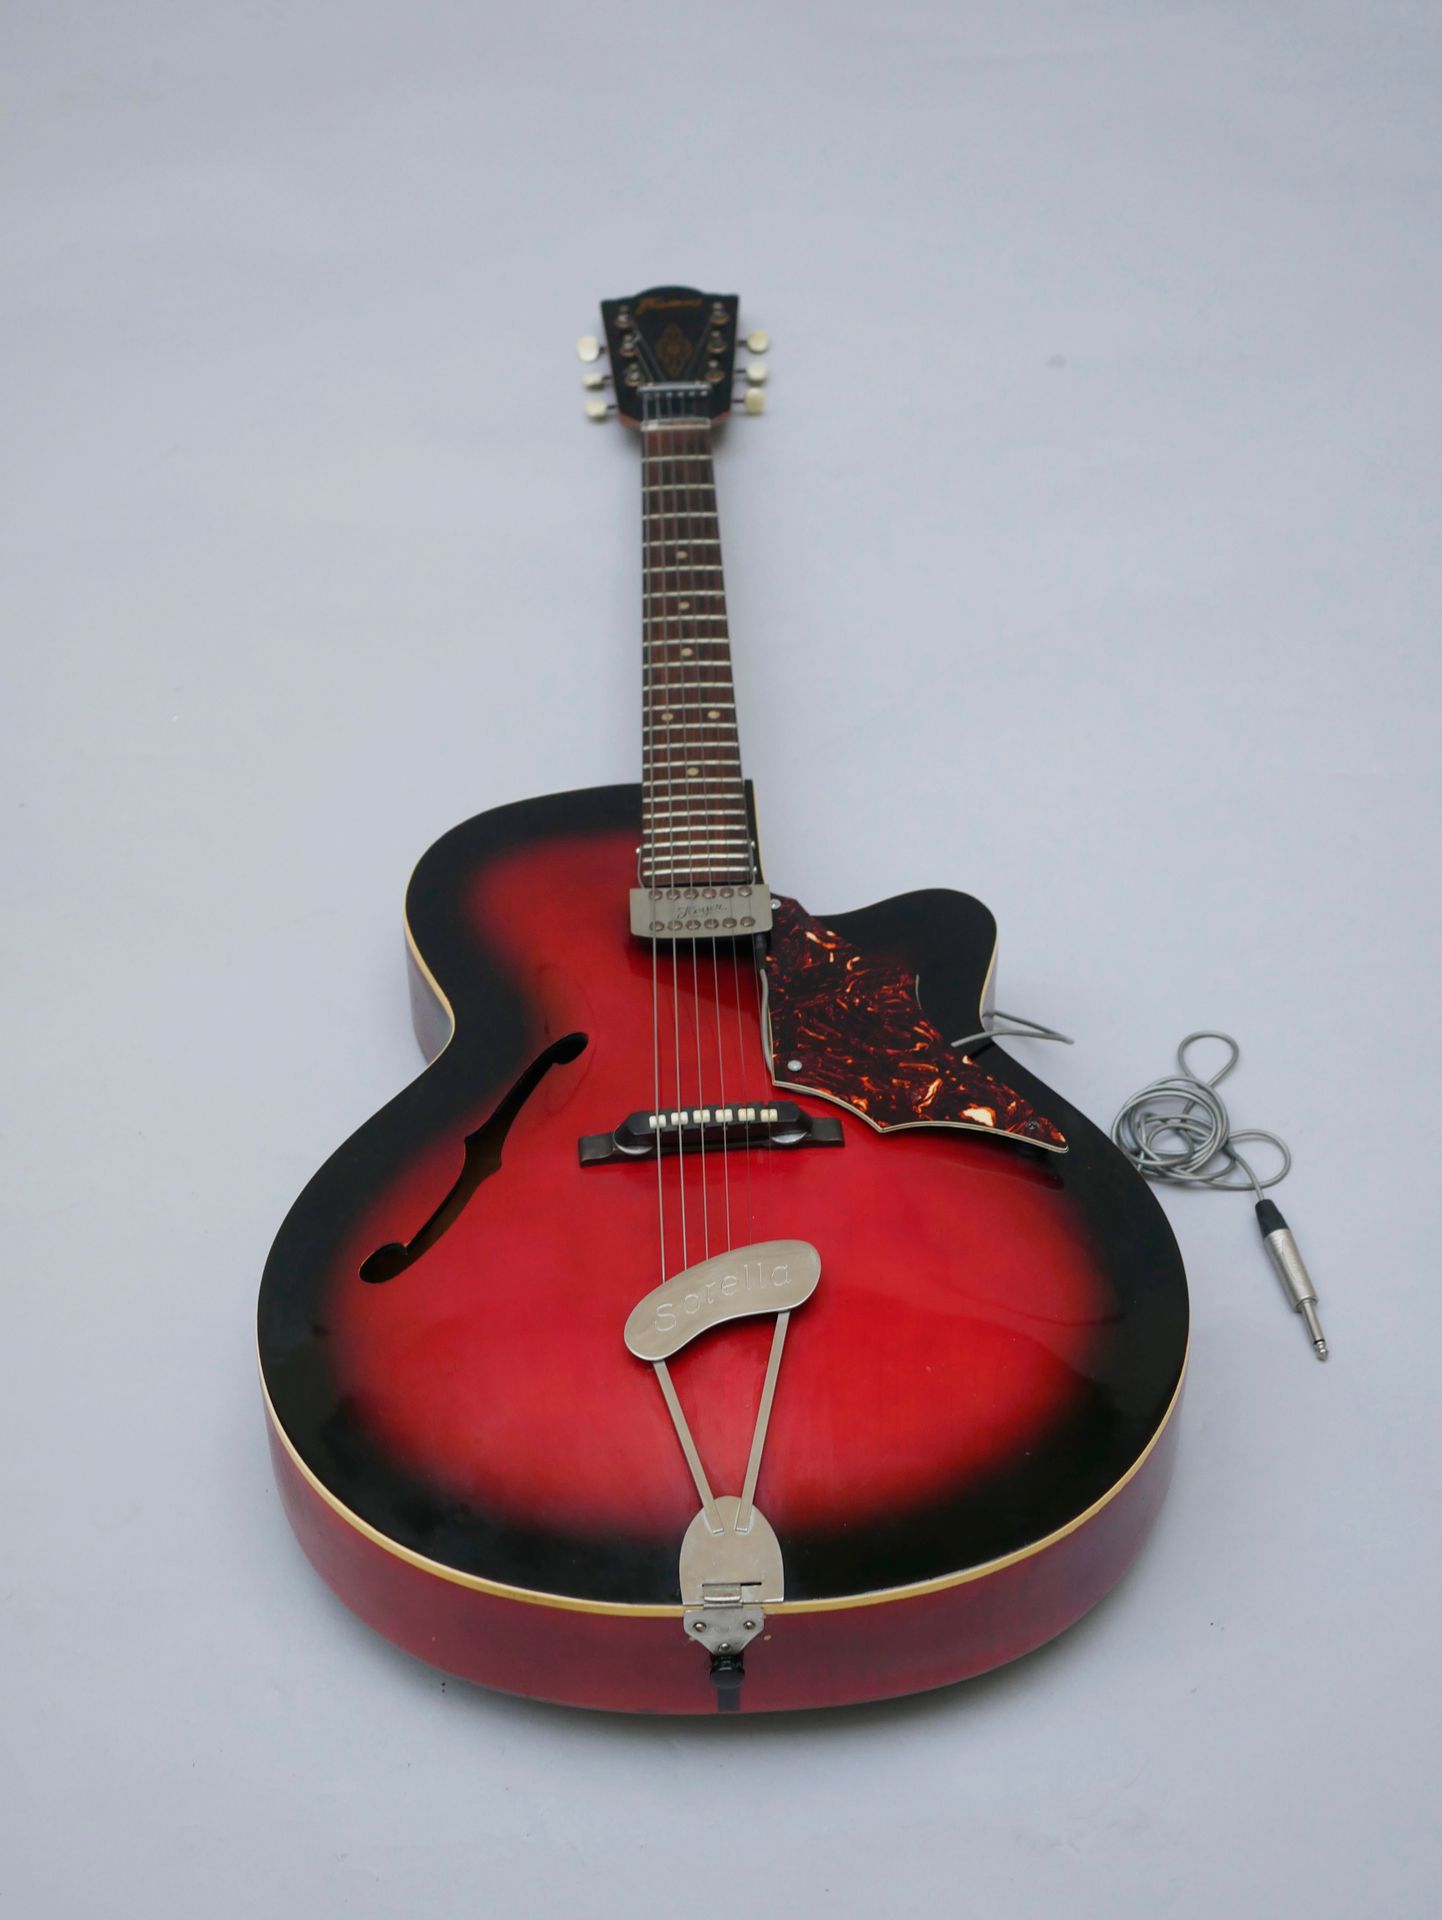 Null Framus空心吉他型号Sorella 5/59，约1960年，红色Sunburst饰面，配Hoyer拾音器。

状况良好，有使用痕迹，封面。